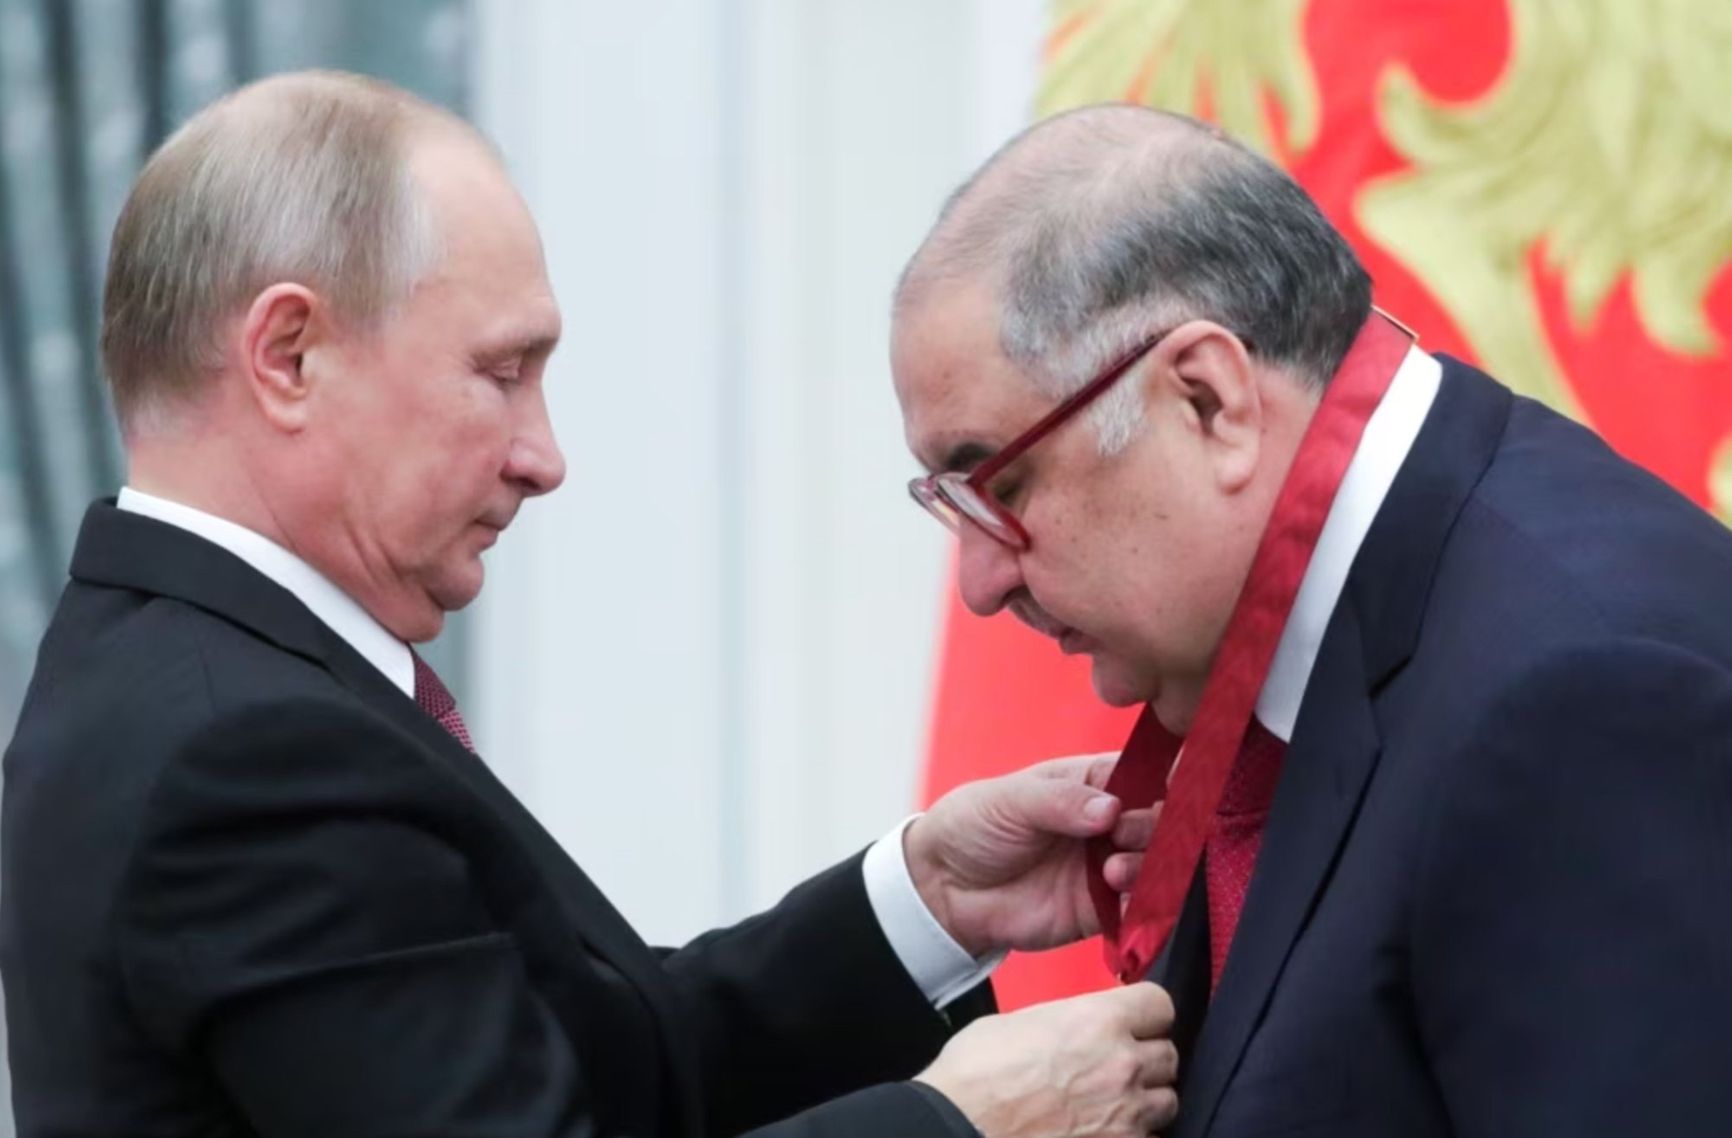 Vladimir Putin and Alisher Usmanov